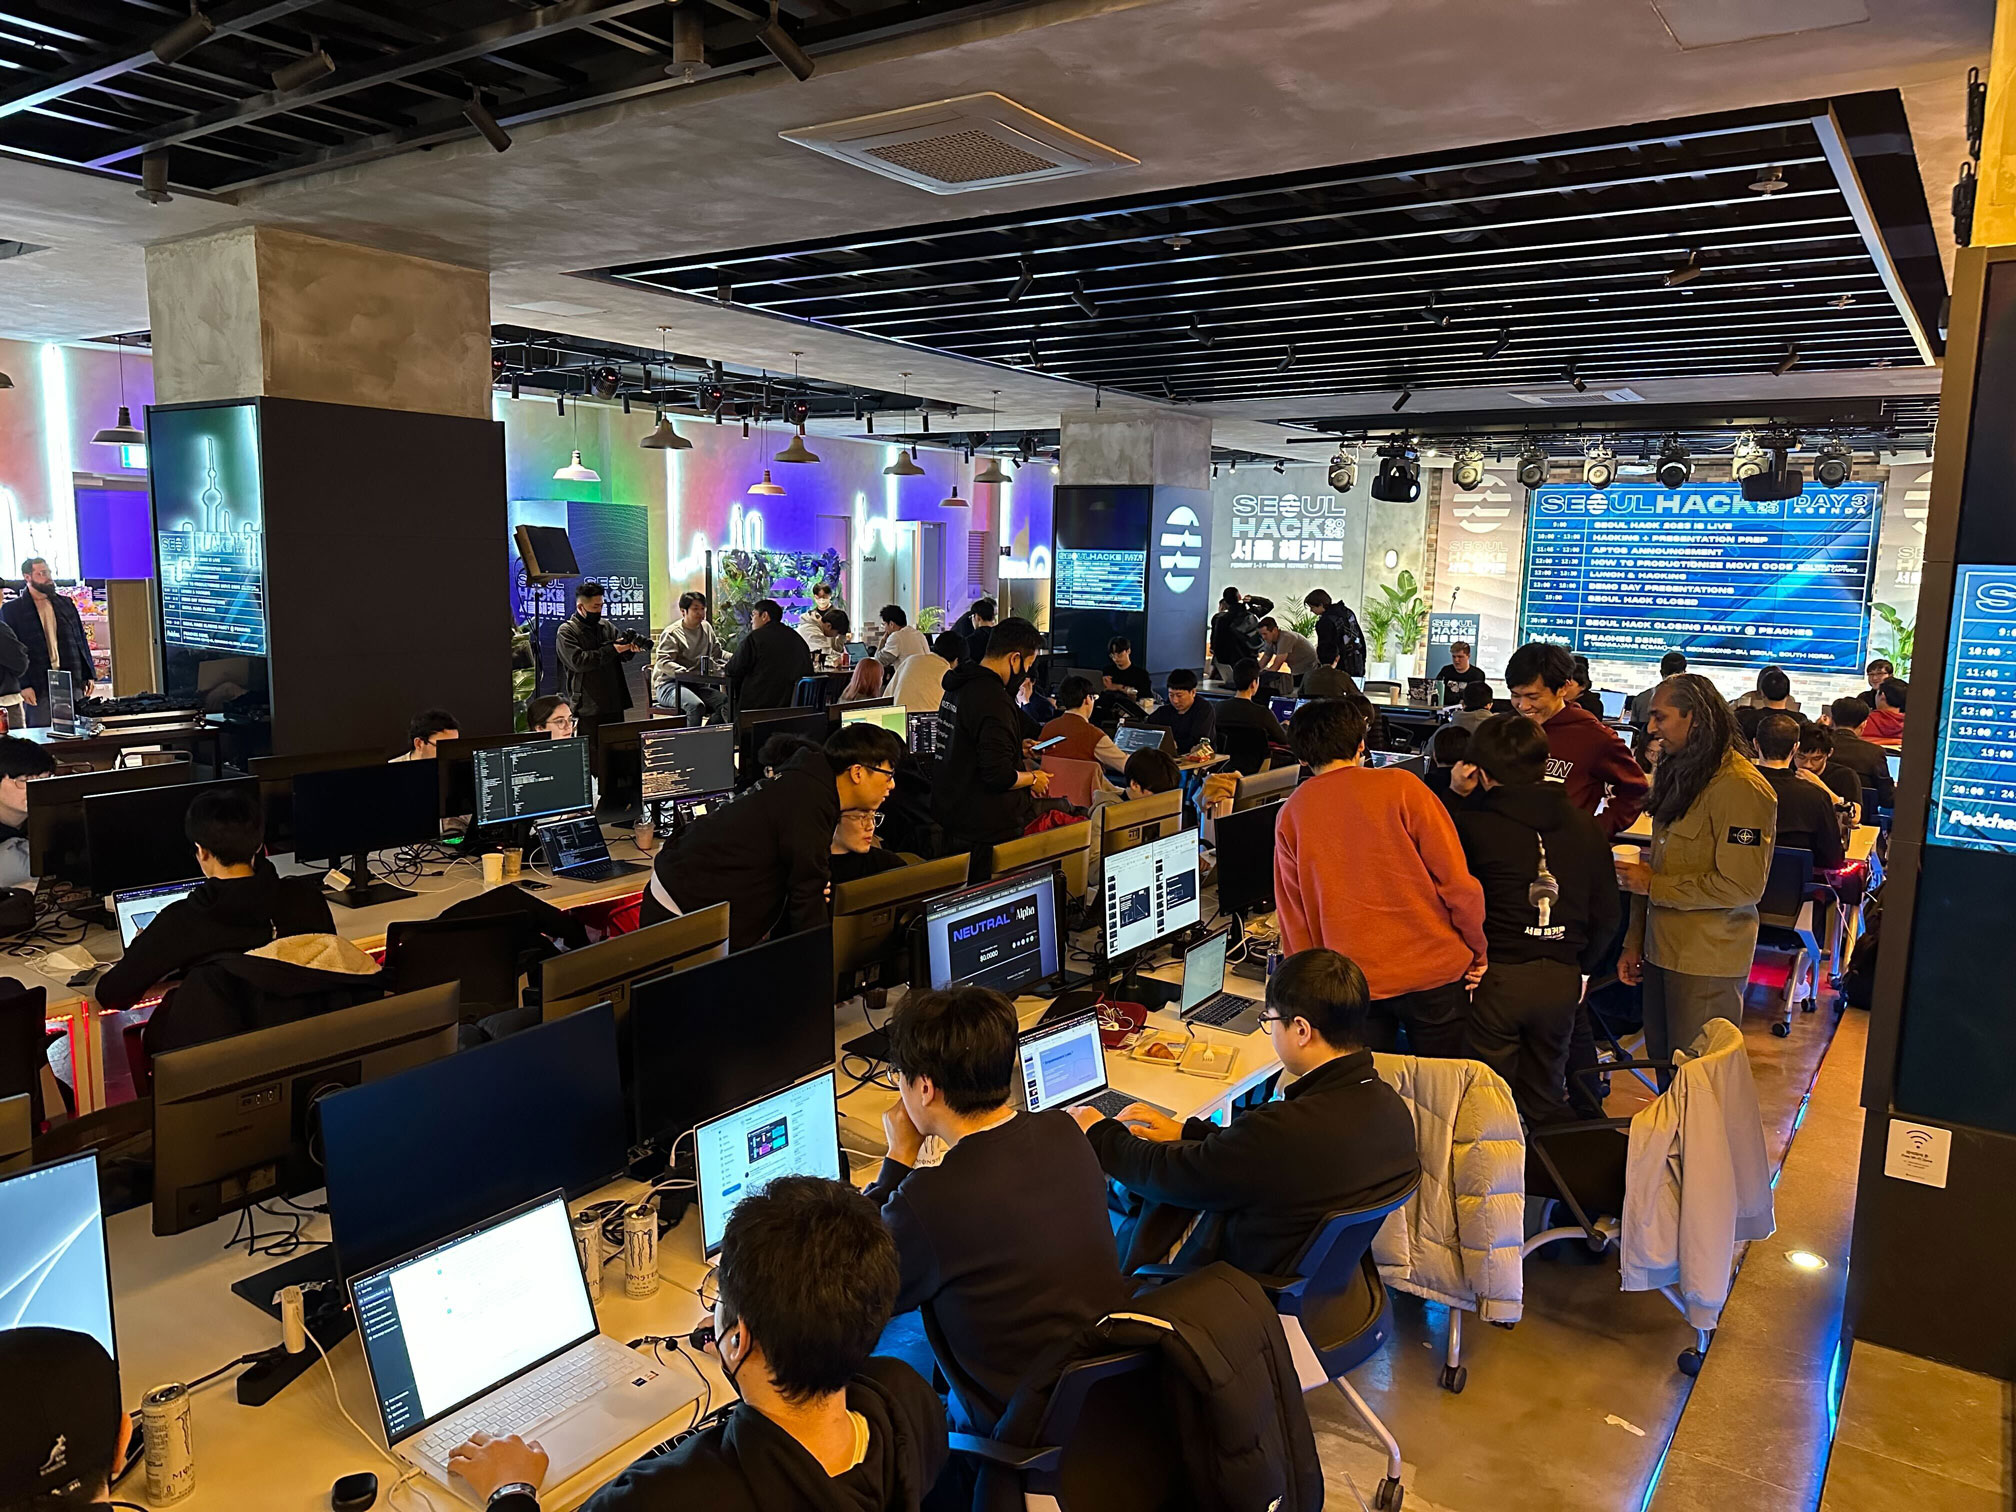 Aptos Seoul Hack 2023 hackathon event in Seoul, South Korea with participants and Mo Shaikh